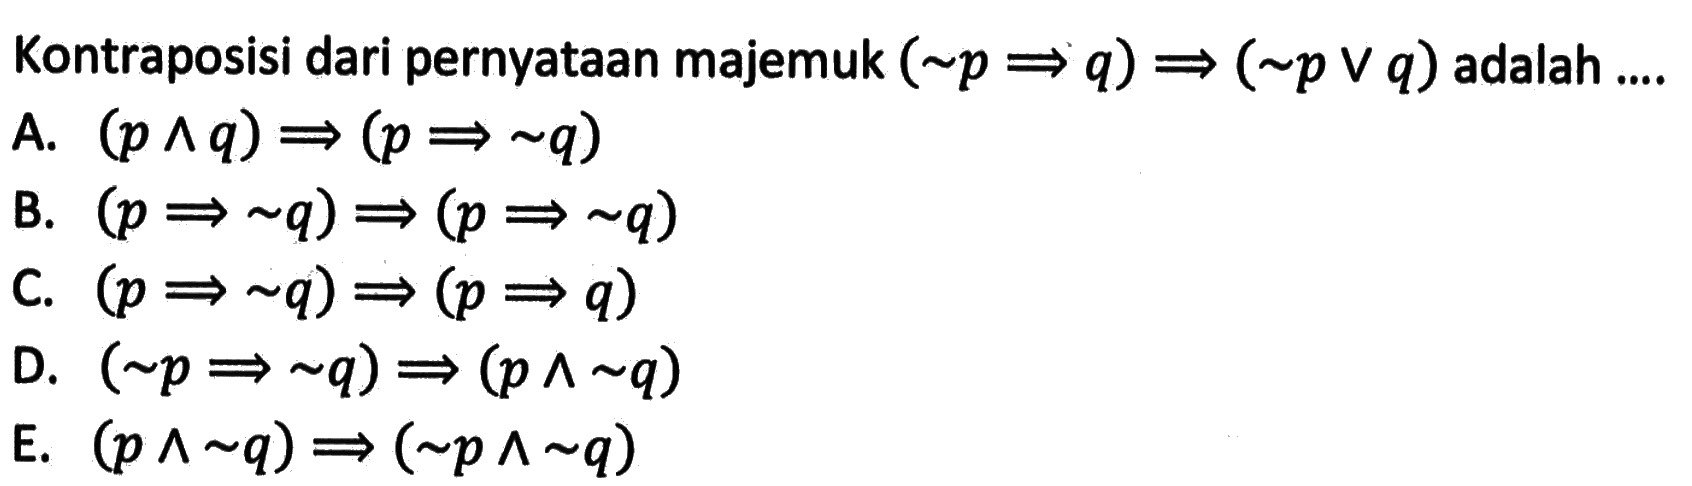 Kontraposisi dari pernyataan majemuk (~p => q) =>(~p v q) adalah ....A. (p ^ q) =>(p => ~q) B. (p => ~q) =>(p => ~q) C. (p => ~q) =>(p => q) D. (~p => ~q) =>(p ^ ~q) E. (p ^ ~q) =>(~p ^ ~q) 